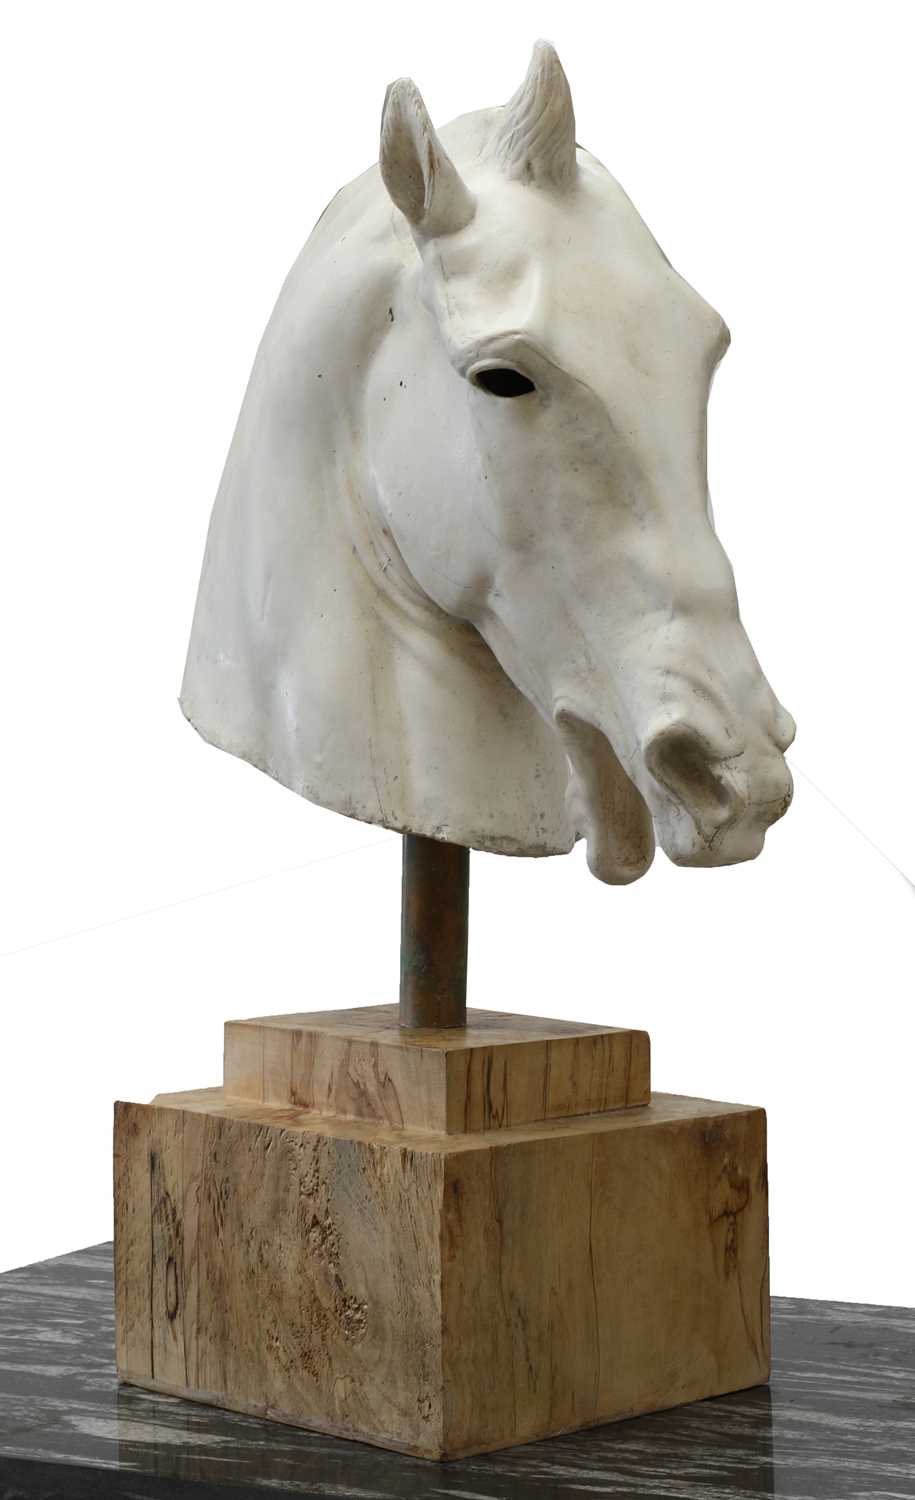 Plaster cast of Roman horse head